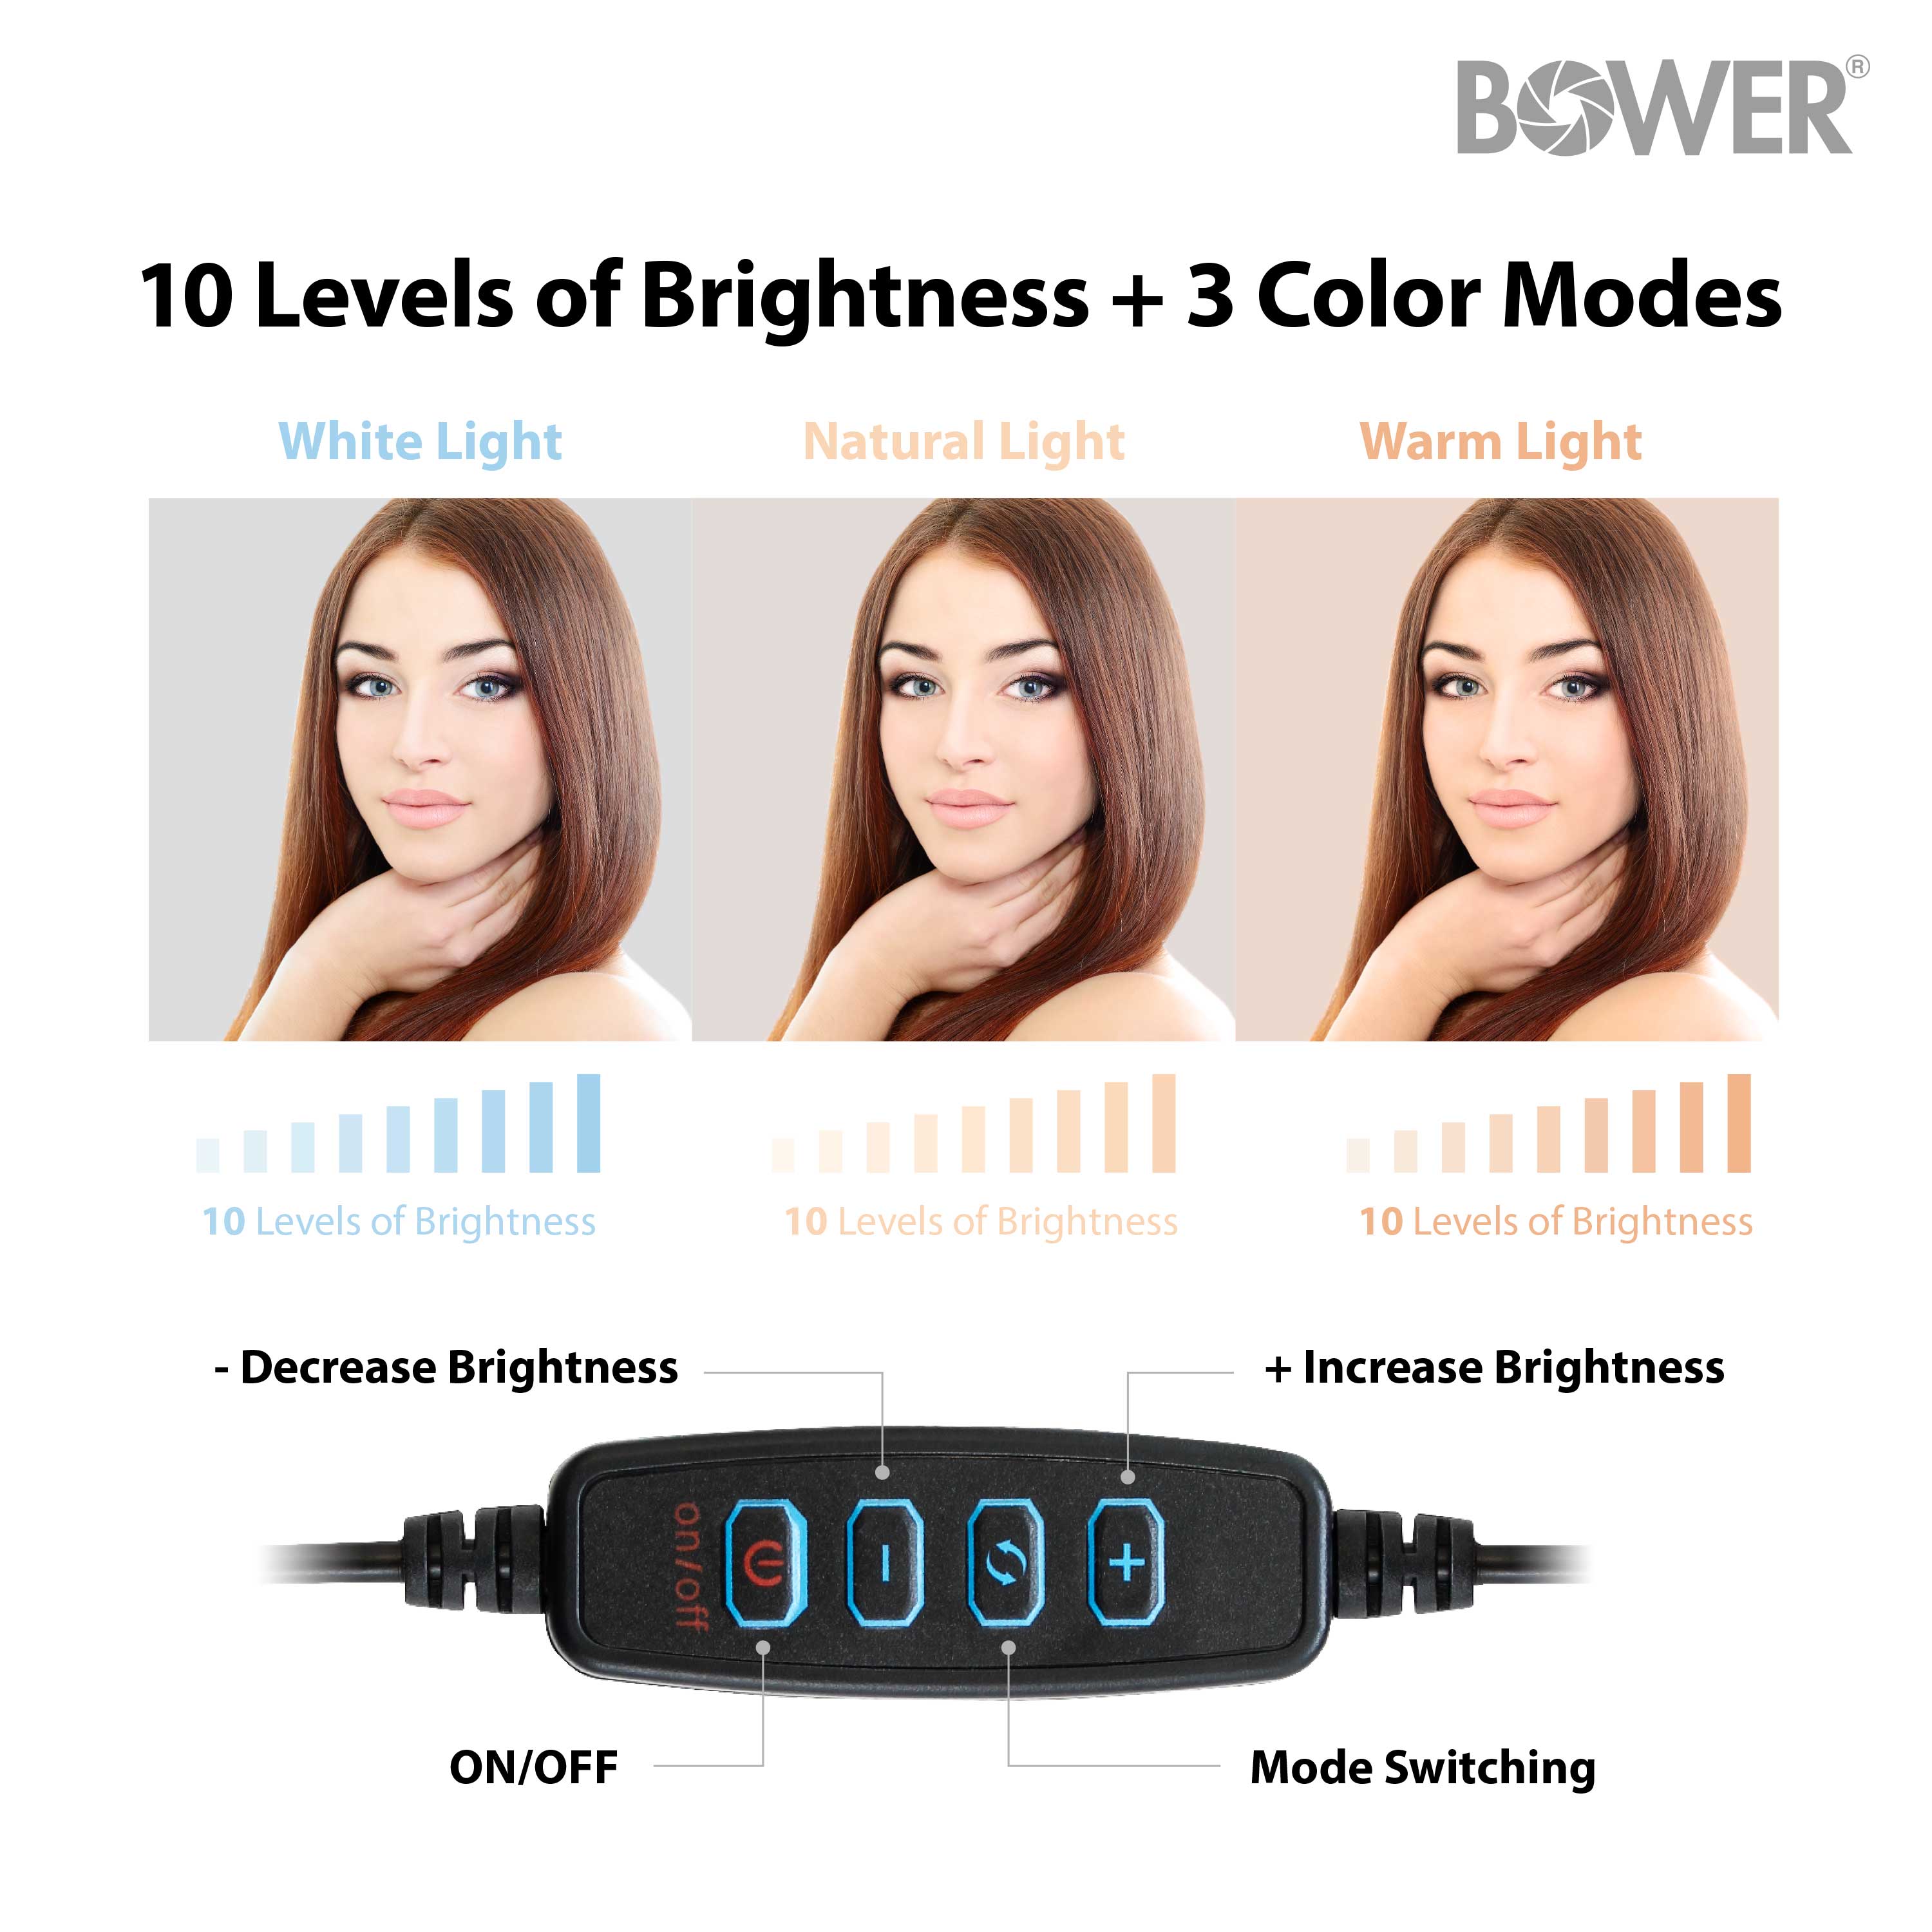 Bower 12” Studio Light USB Power Ball-Head Mount 62" Adjustable Tripod 3 Colors 10 Brightness Levels In-Line Remote - image 5 of 7